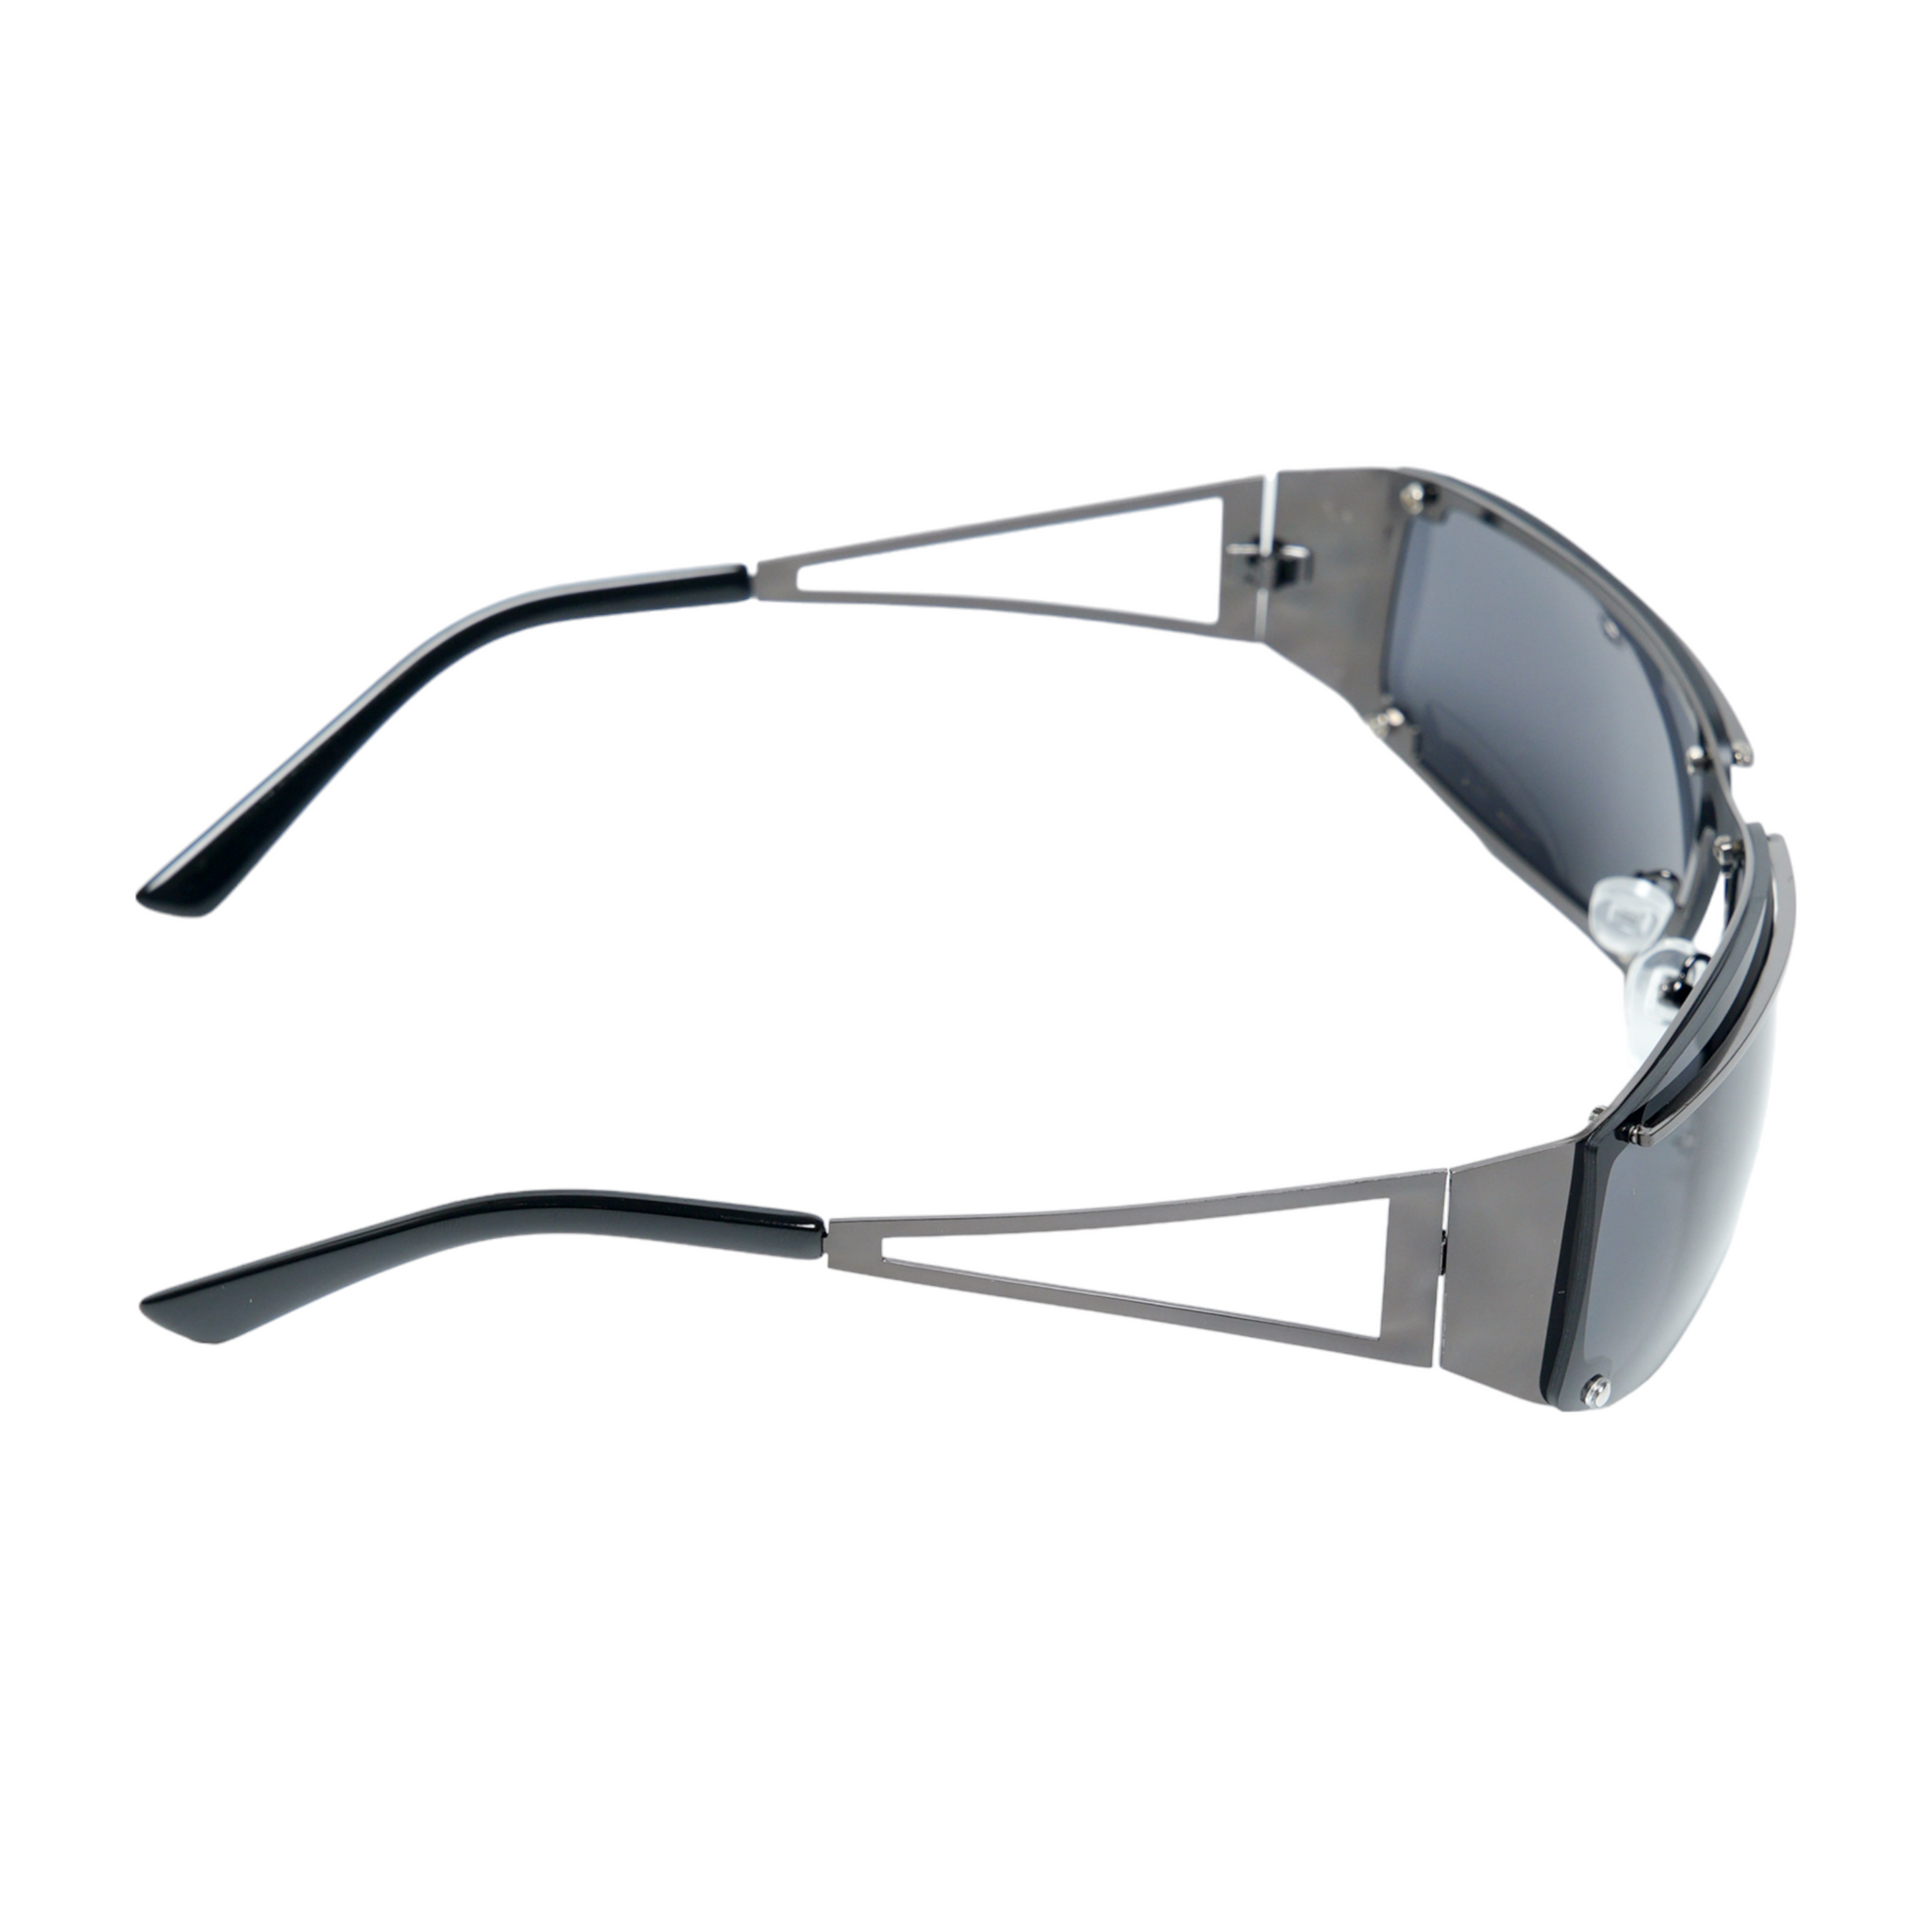 Chokore Hollow Metallic Wrap-around Sunglasses (Black-Gray)